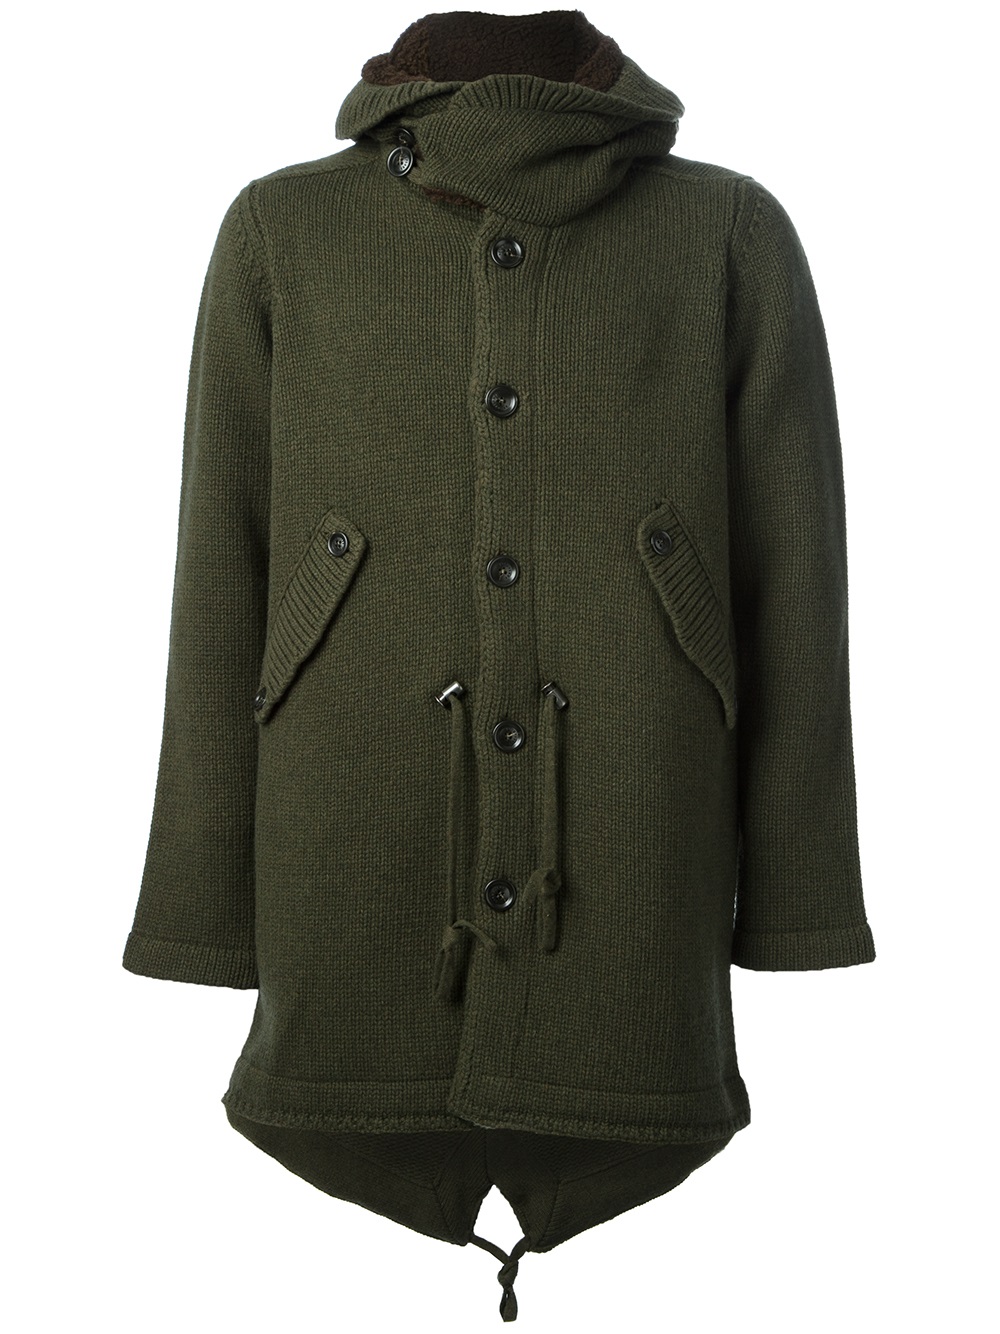 Lyst - Esemplare Hooded Duffle Coat in Green for Men